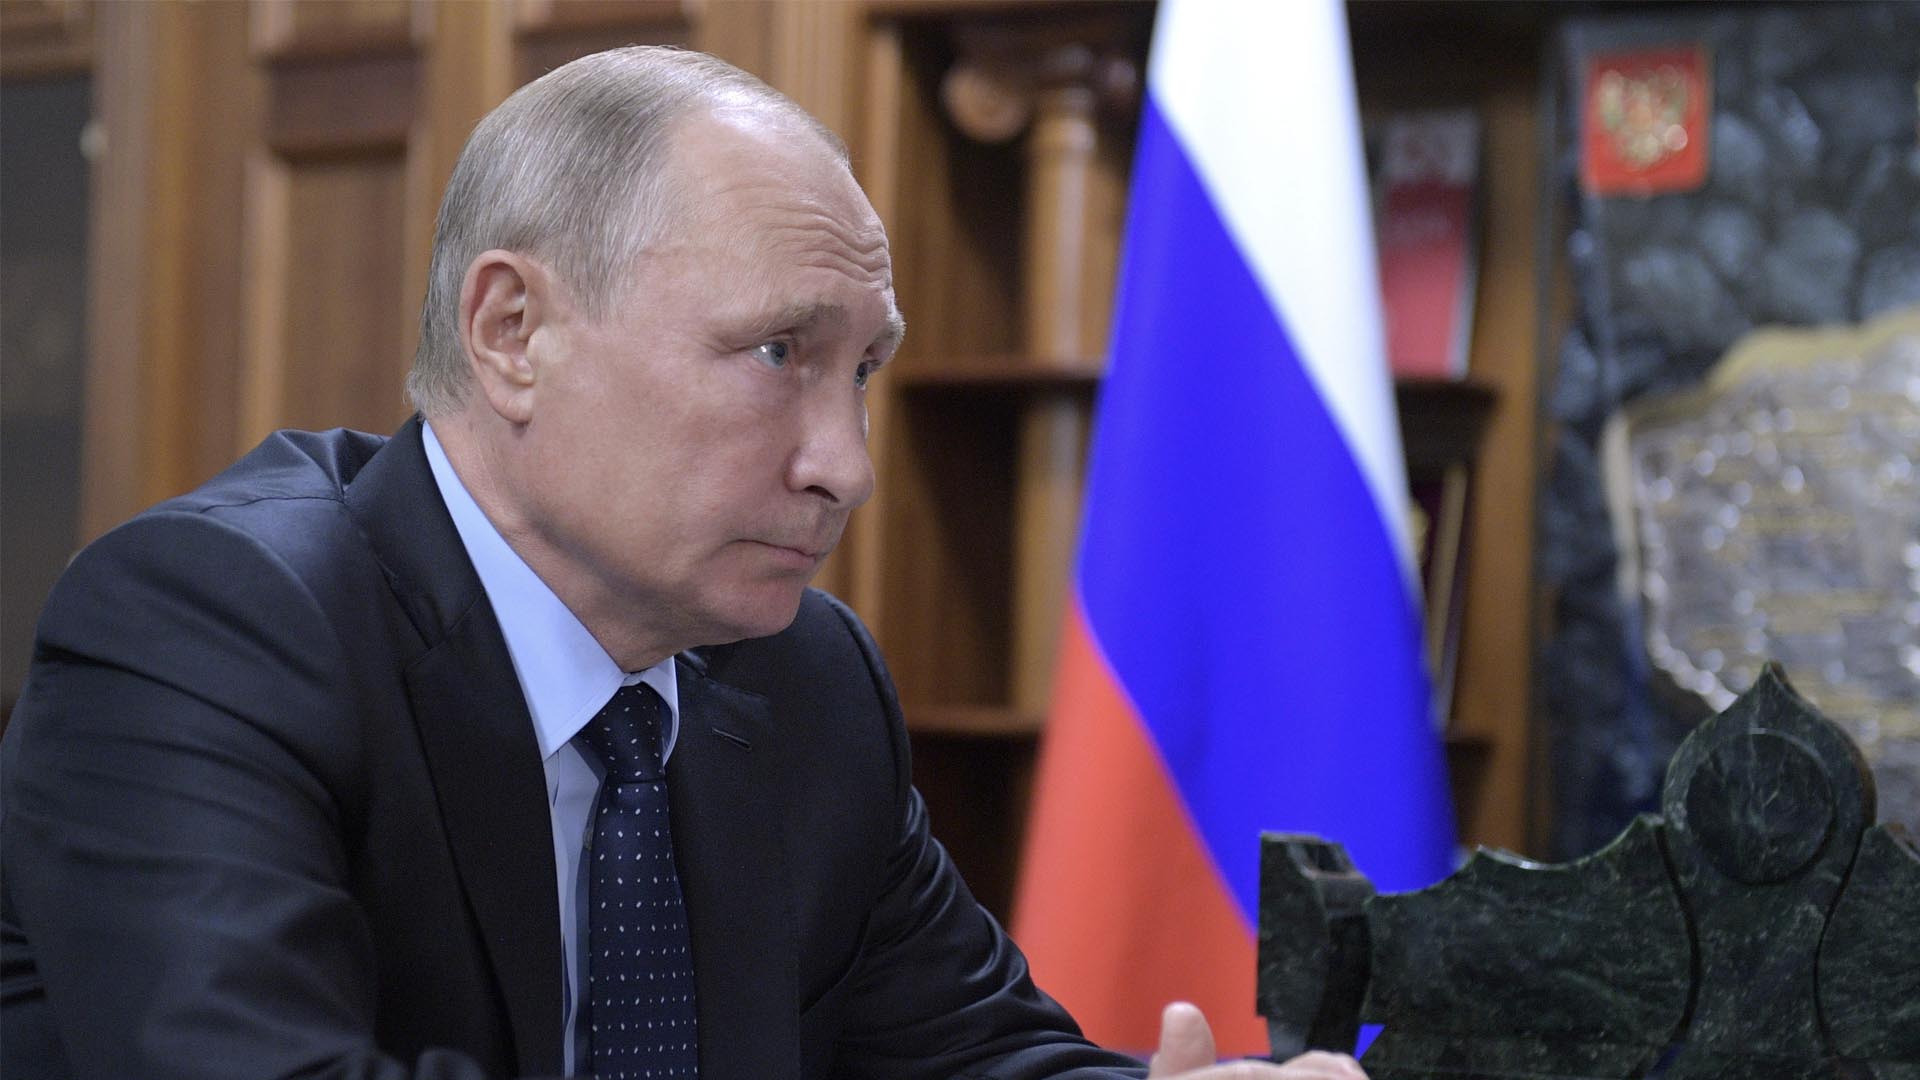 Reino Unido considera a Putin responsable "en última instancia" del caso Novichok